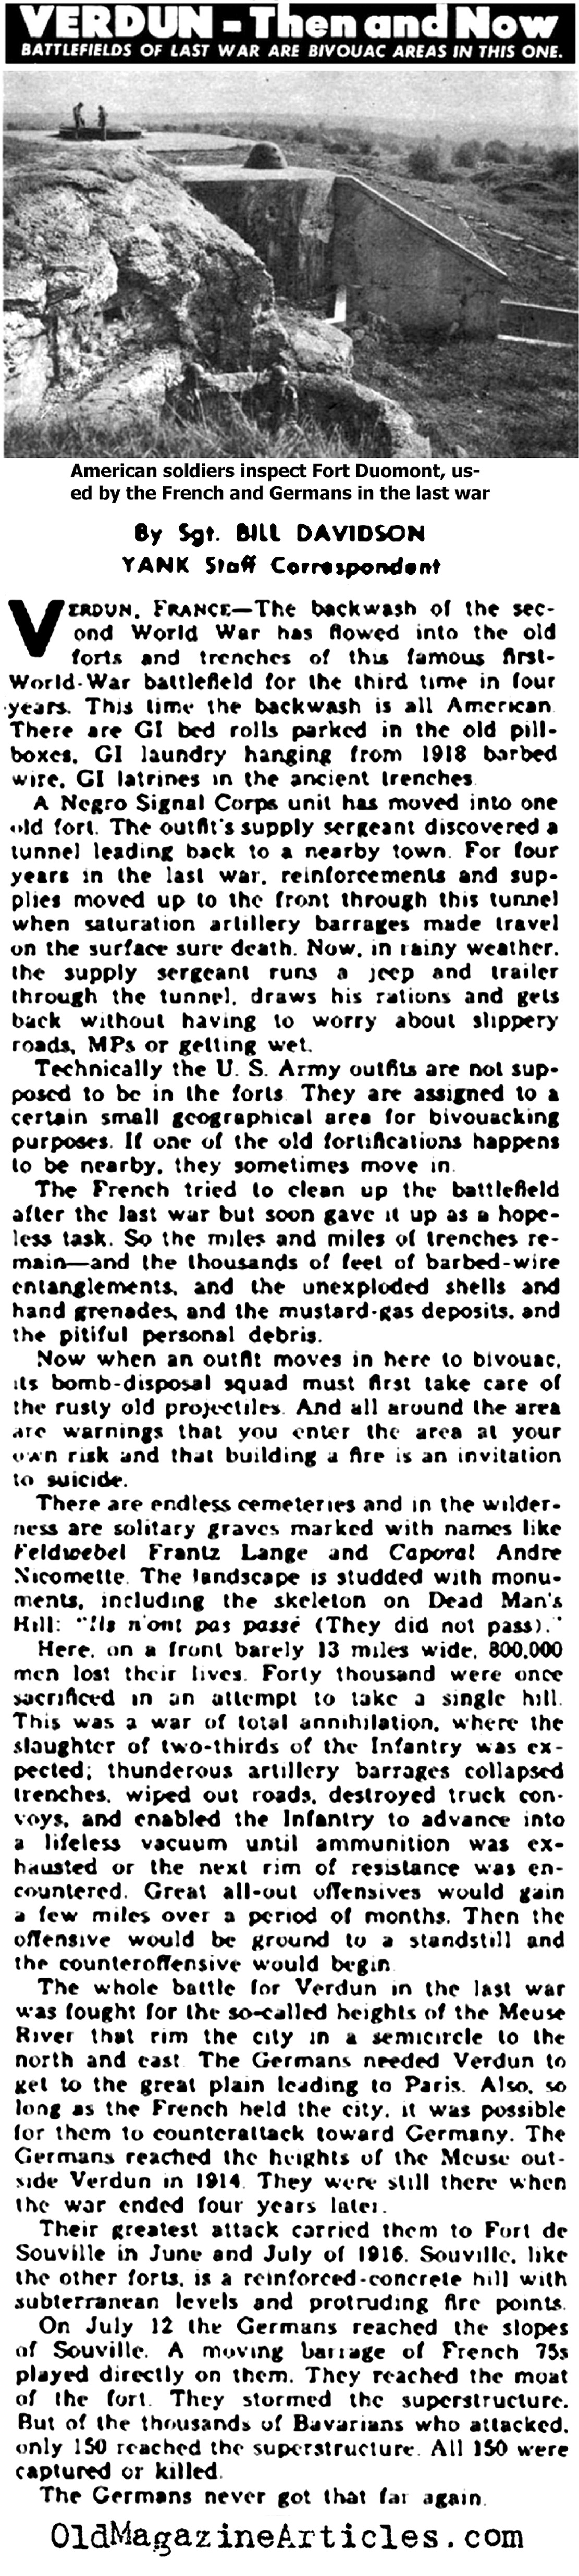 Verdun, 1944 (Yank Magazine, 1944)